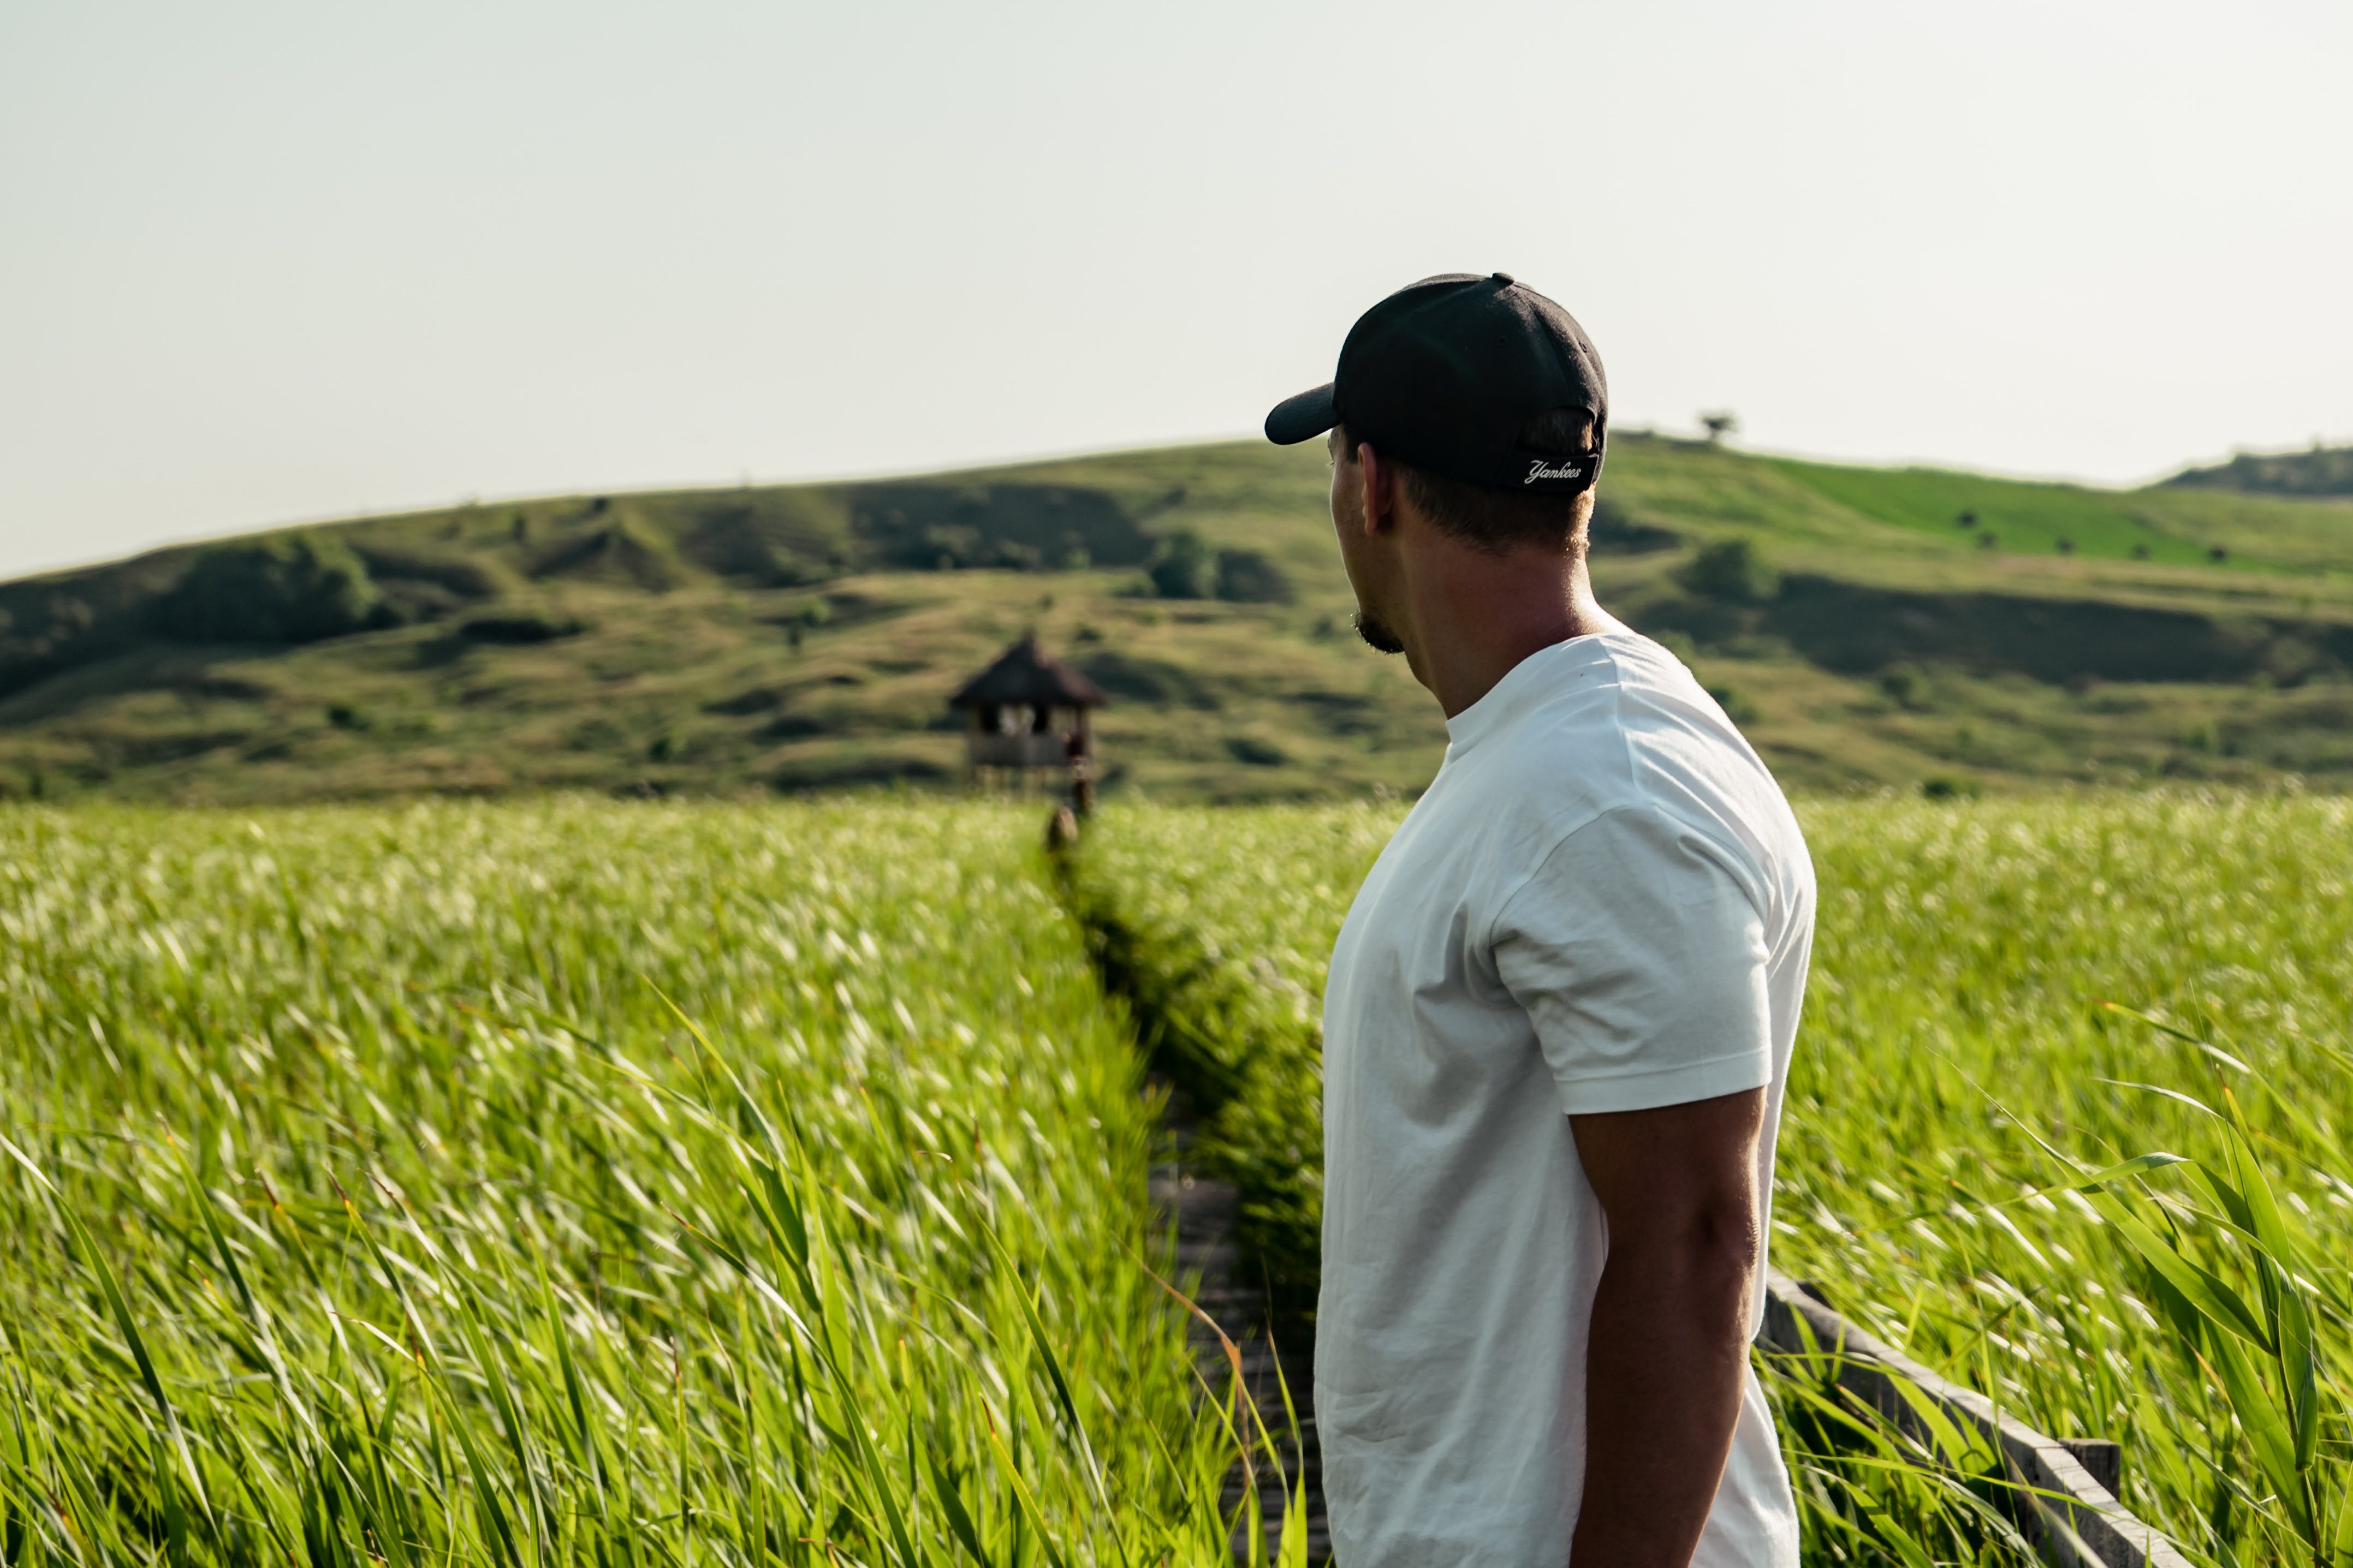 Noi mirant un camp de blat. Font: Pexels - Vlad Chețan